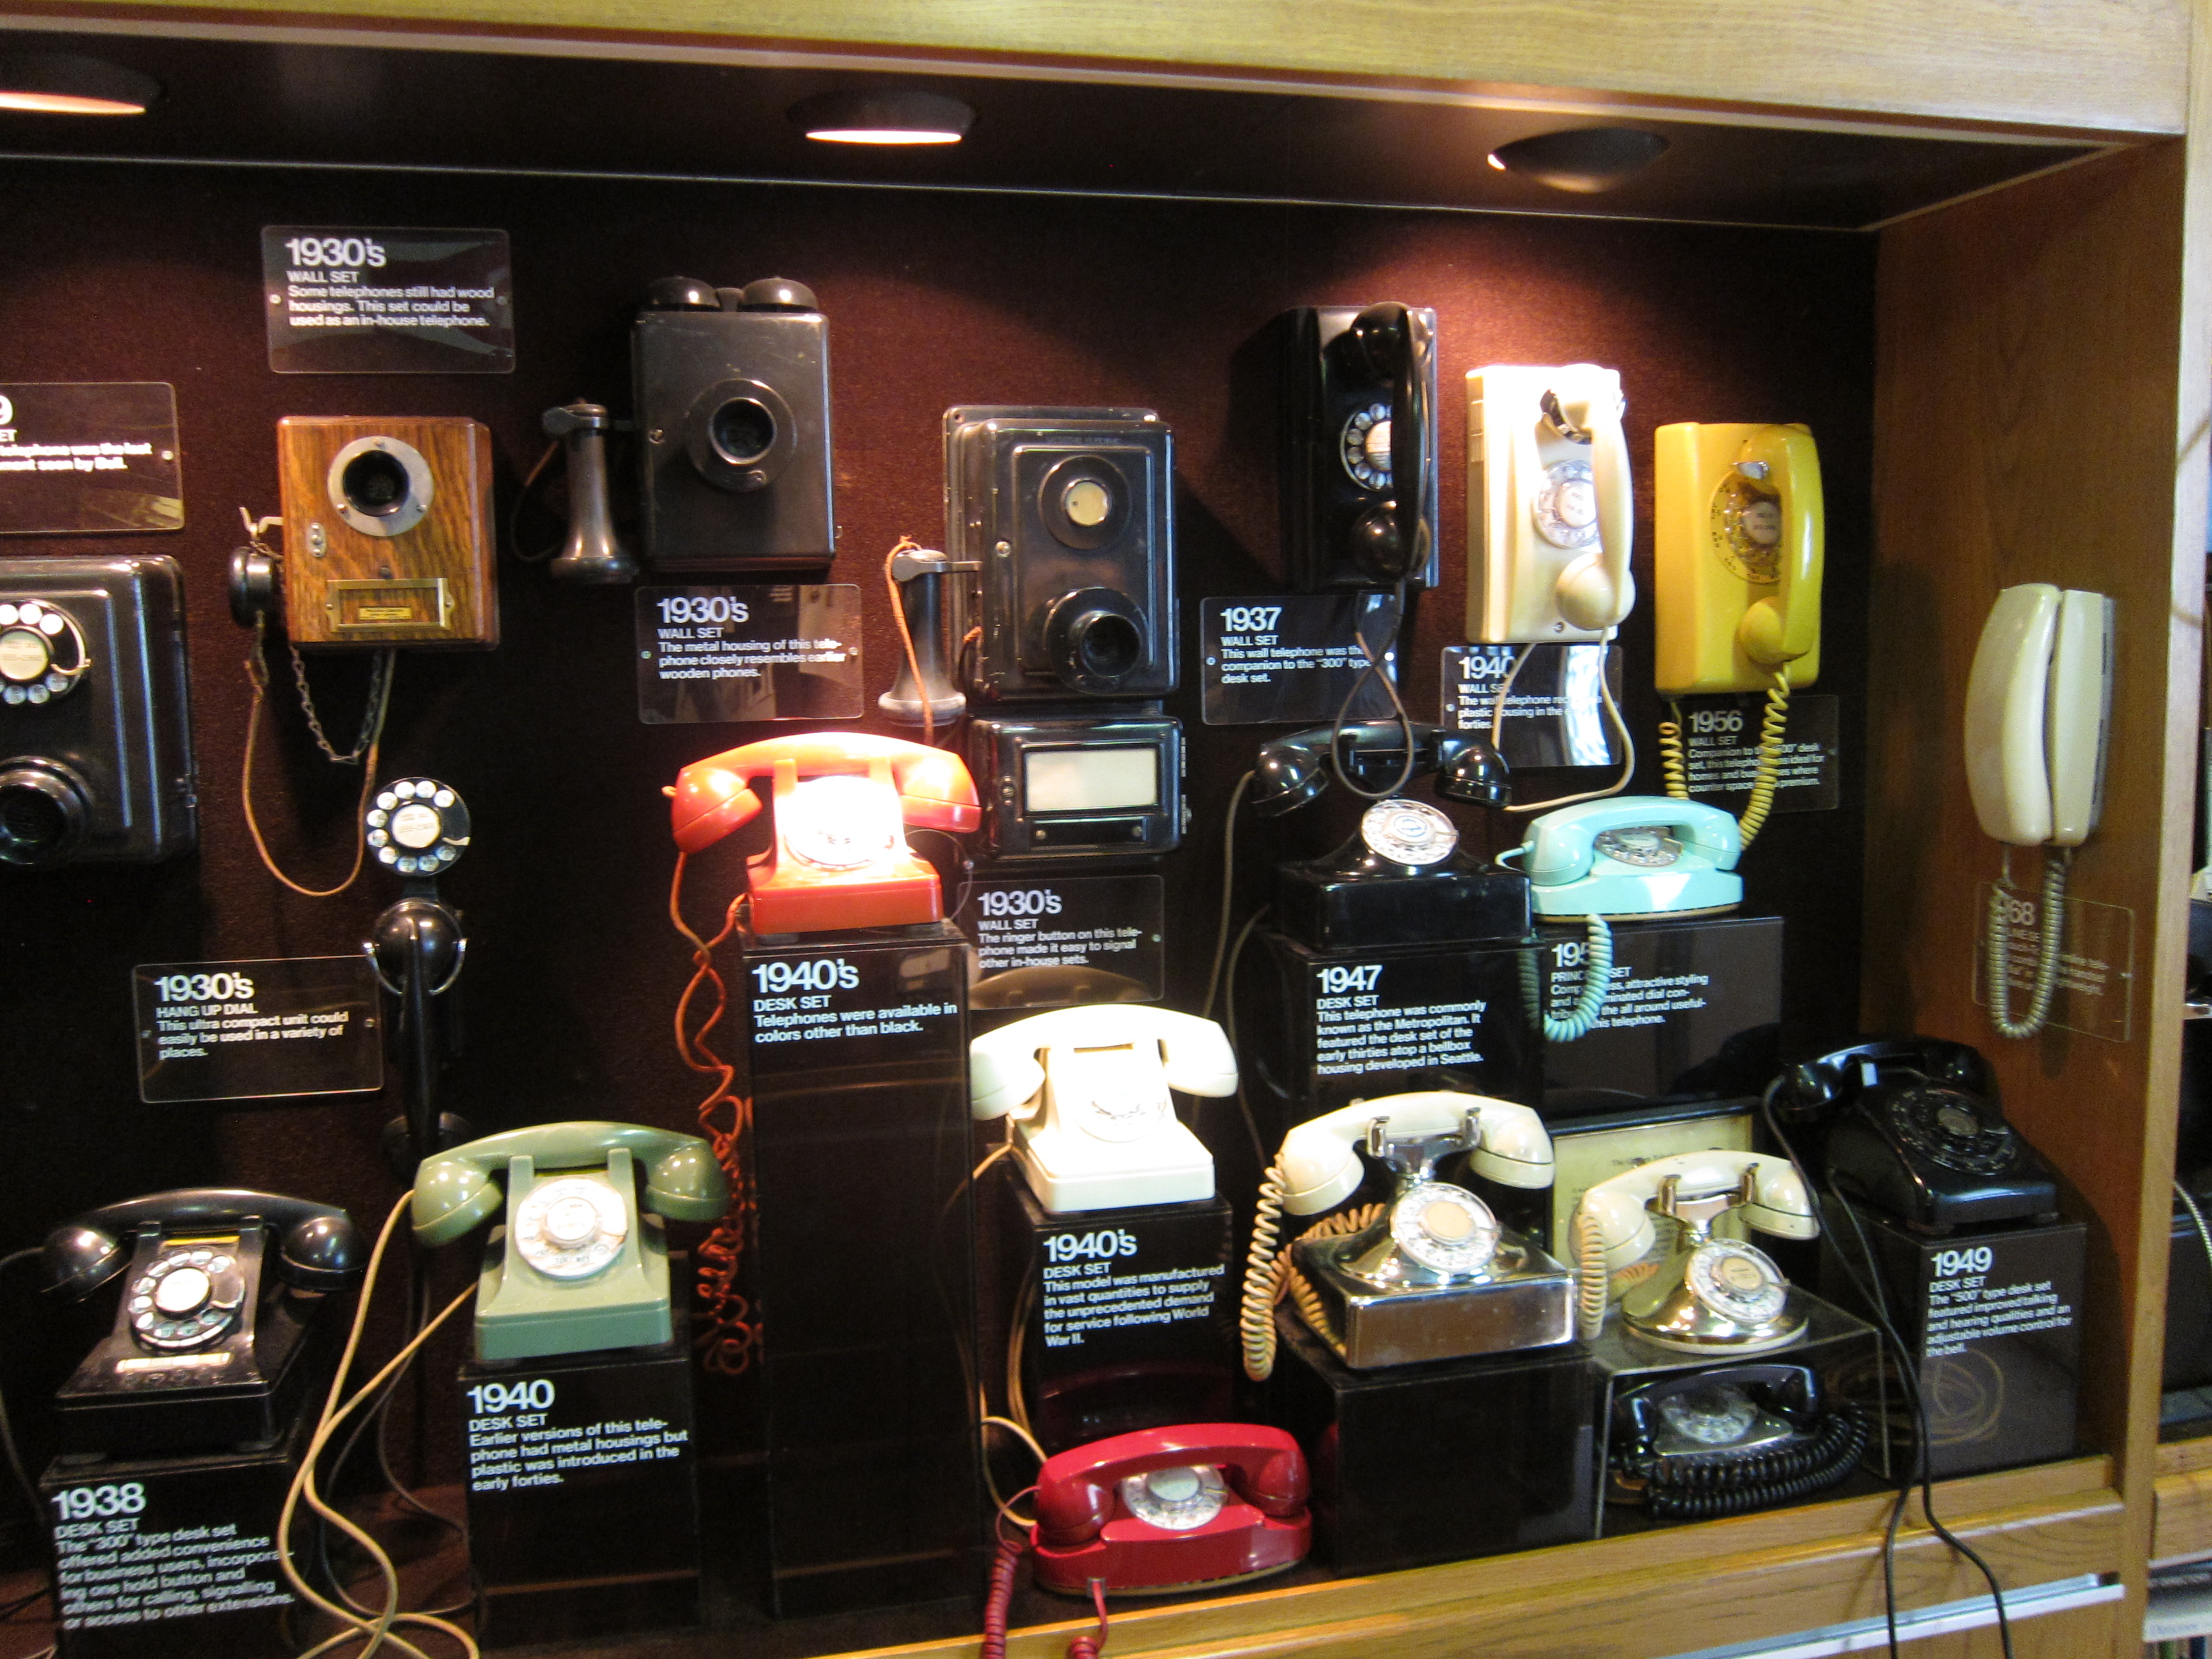 Vintage telephones on display.